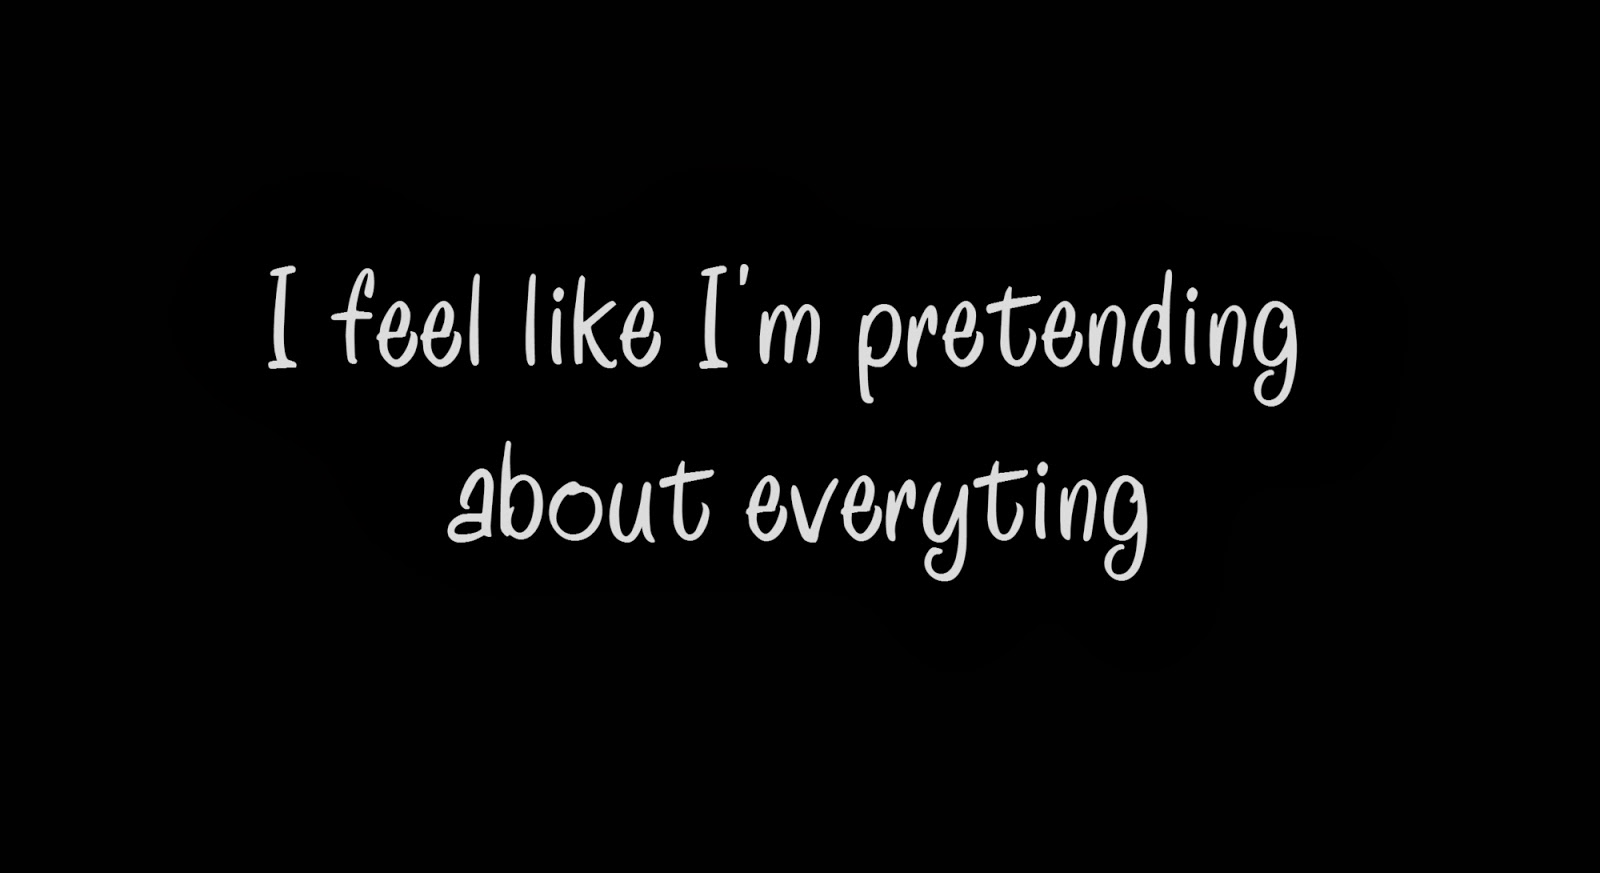 I feel like I'm pretending about everyting